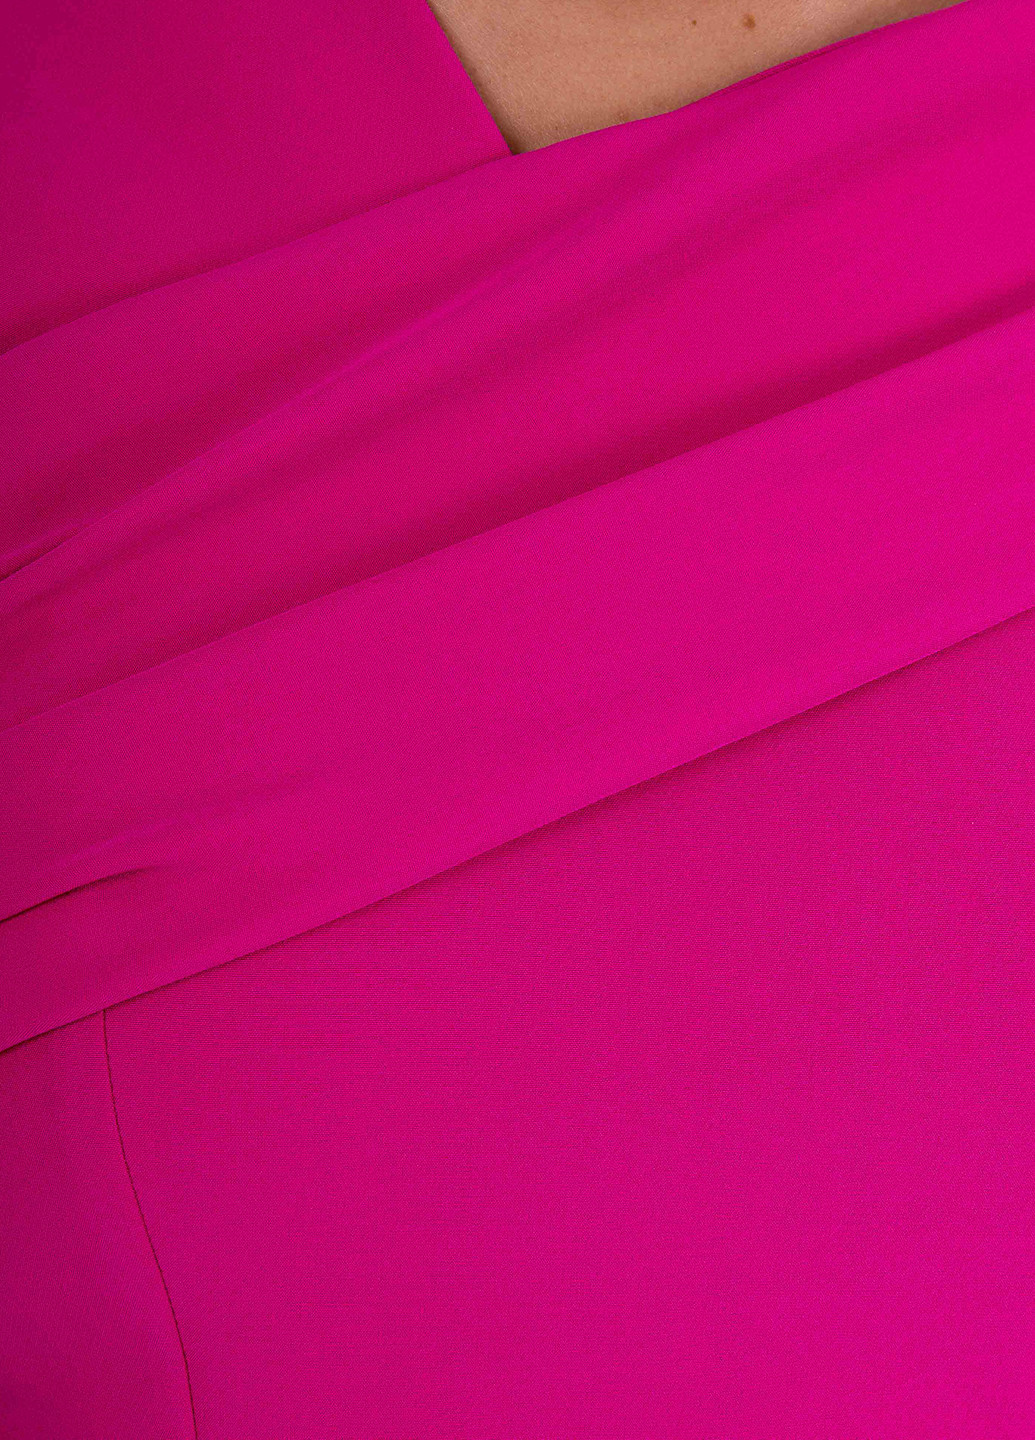 Розовое коктейльное платье футляр Lipsy однотонное